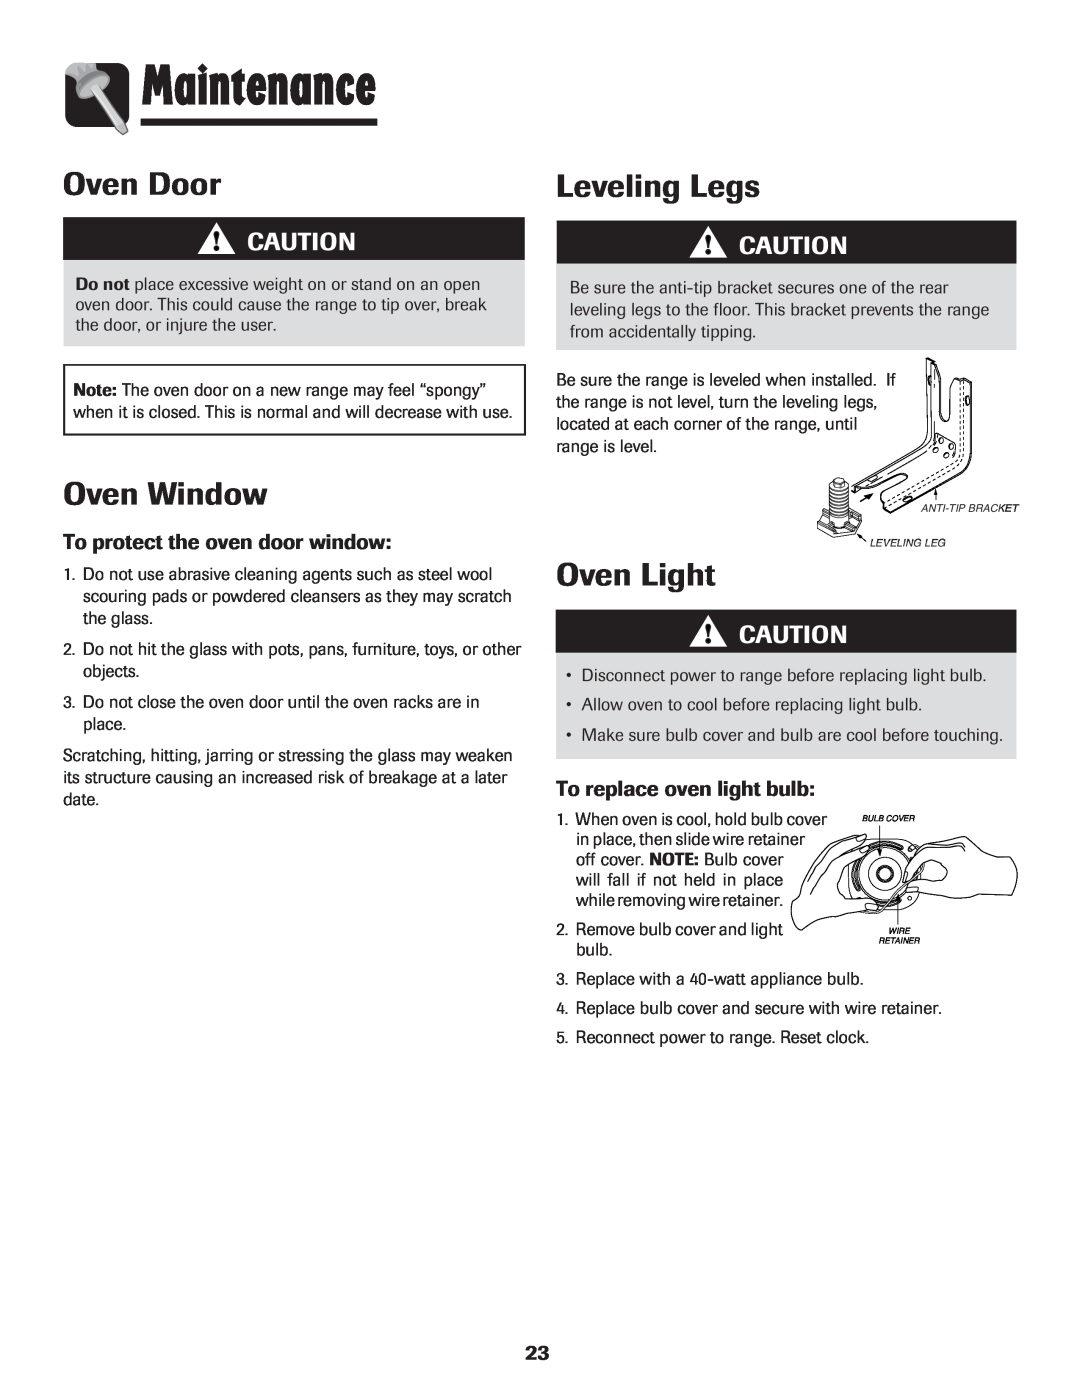 Amana AER5845RAW Maintenance, Oven Door, Oven Window, Leveling Legs, To protect the oven door window, Oven Light, bulb 